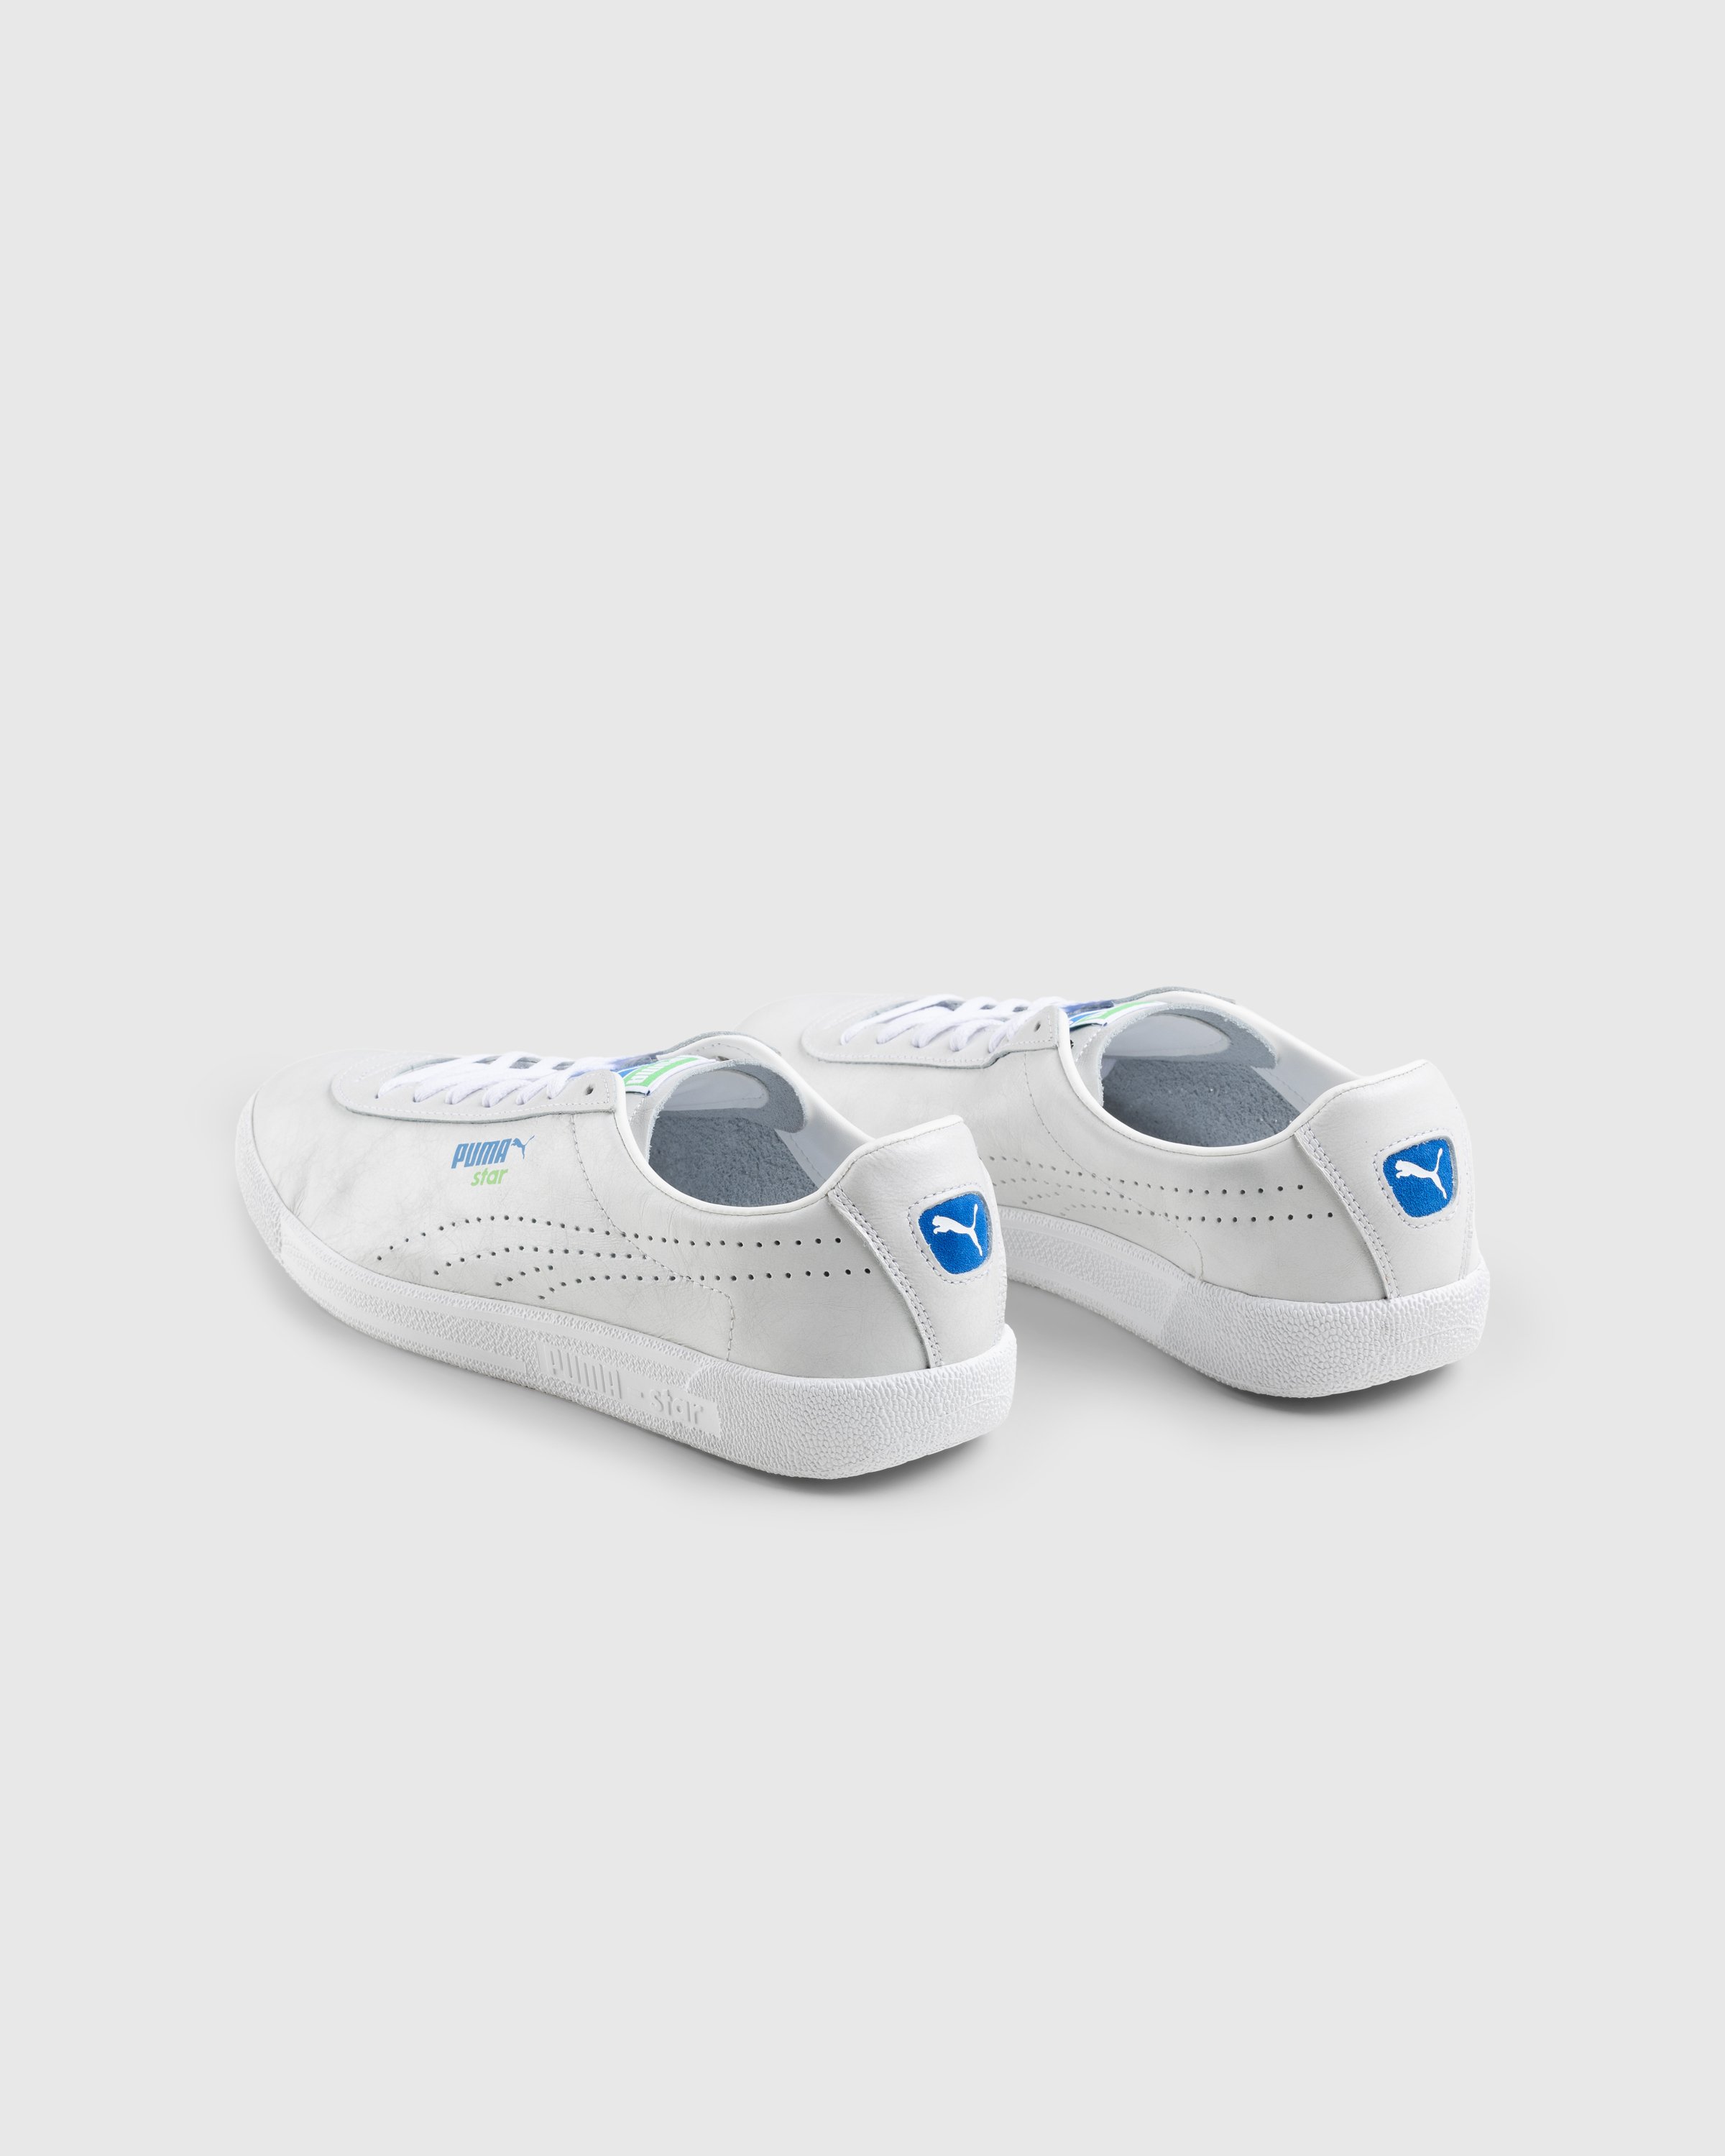 Puma - Star Tennis Whites - Footwear - Multi - Image 4